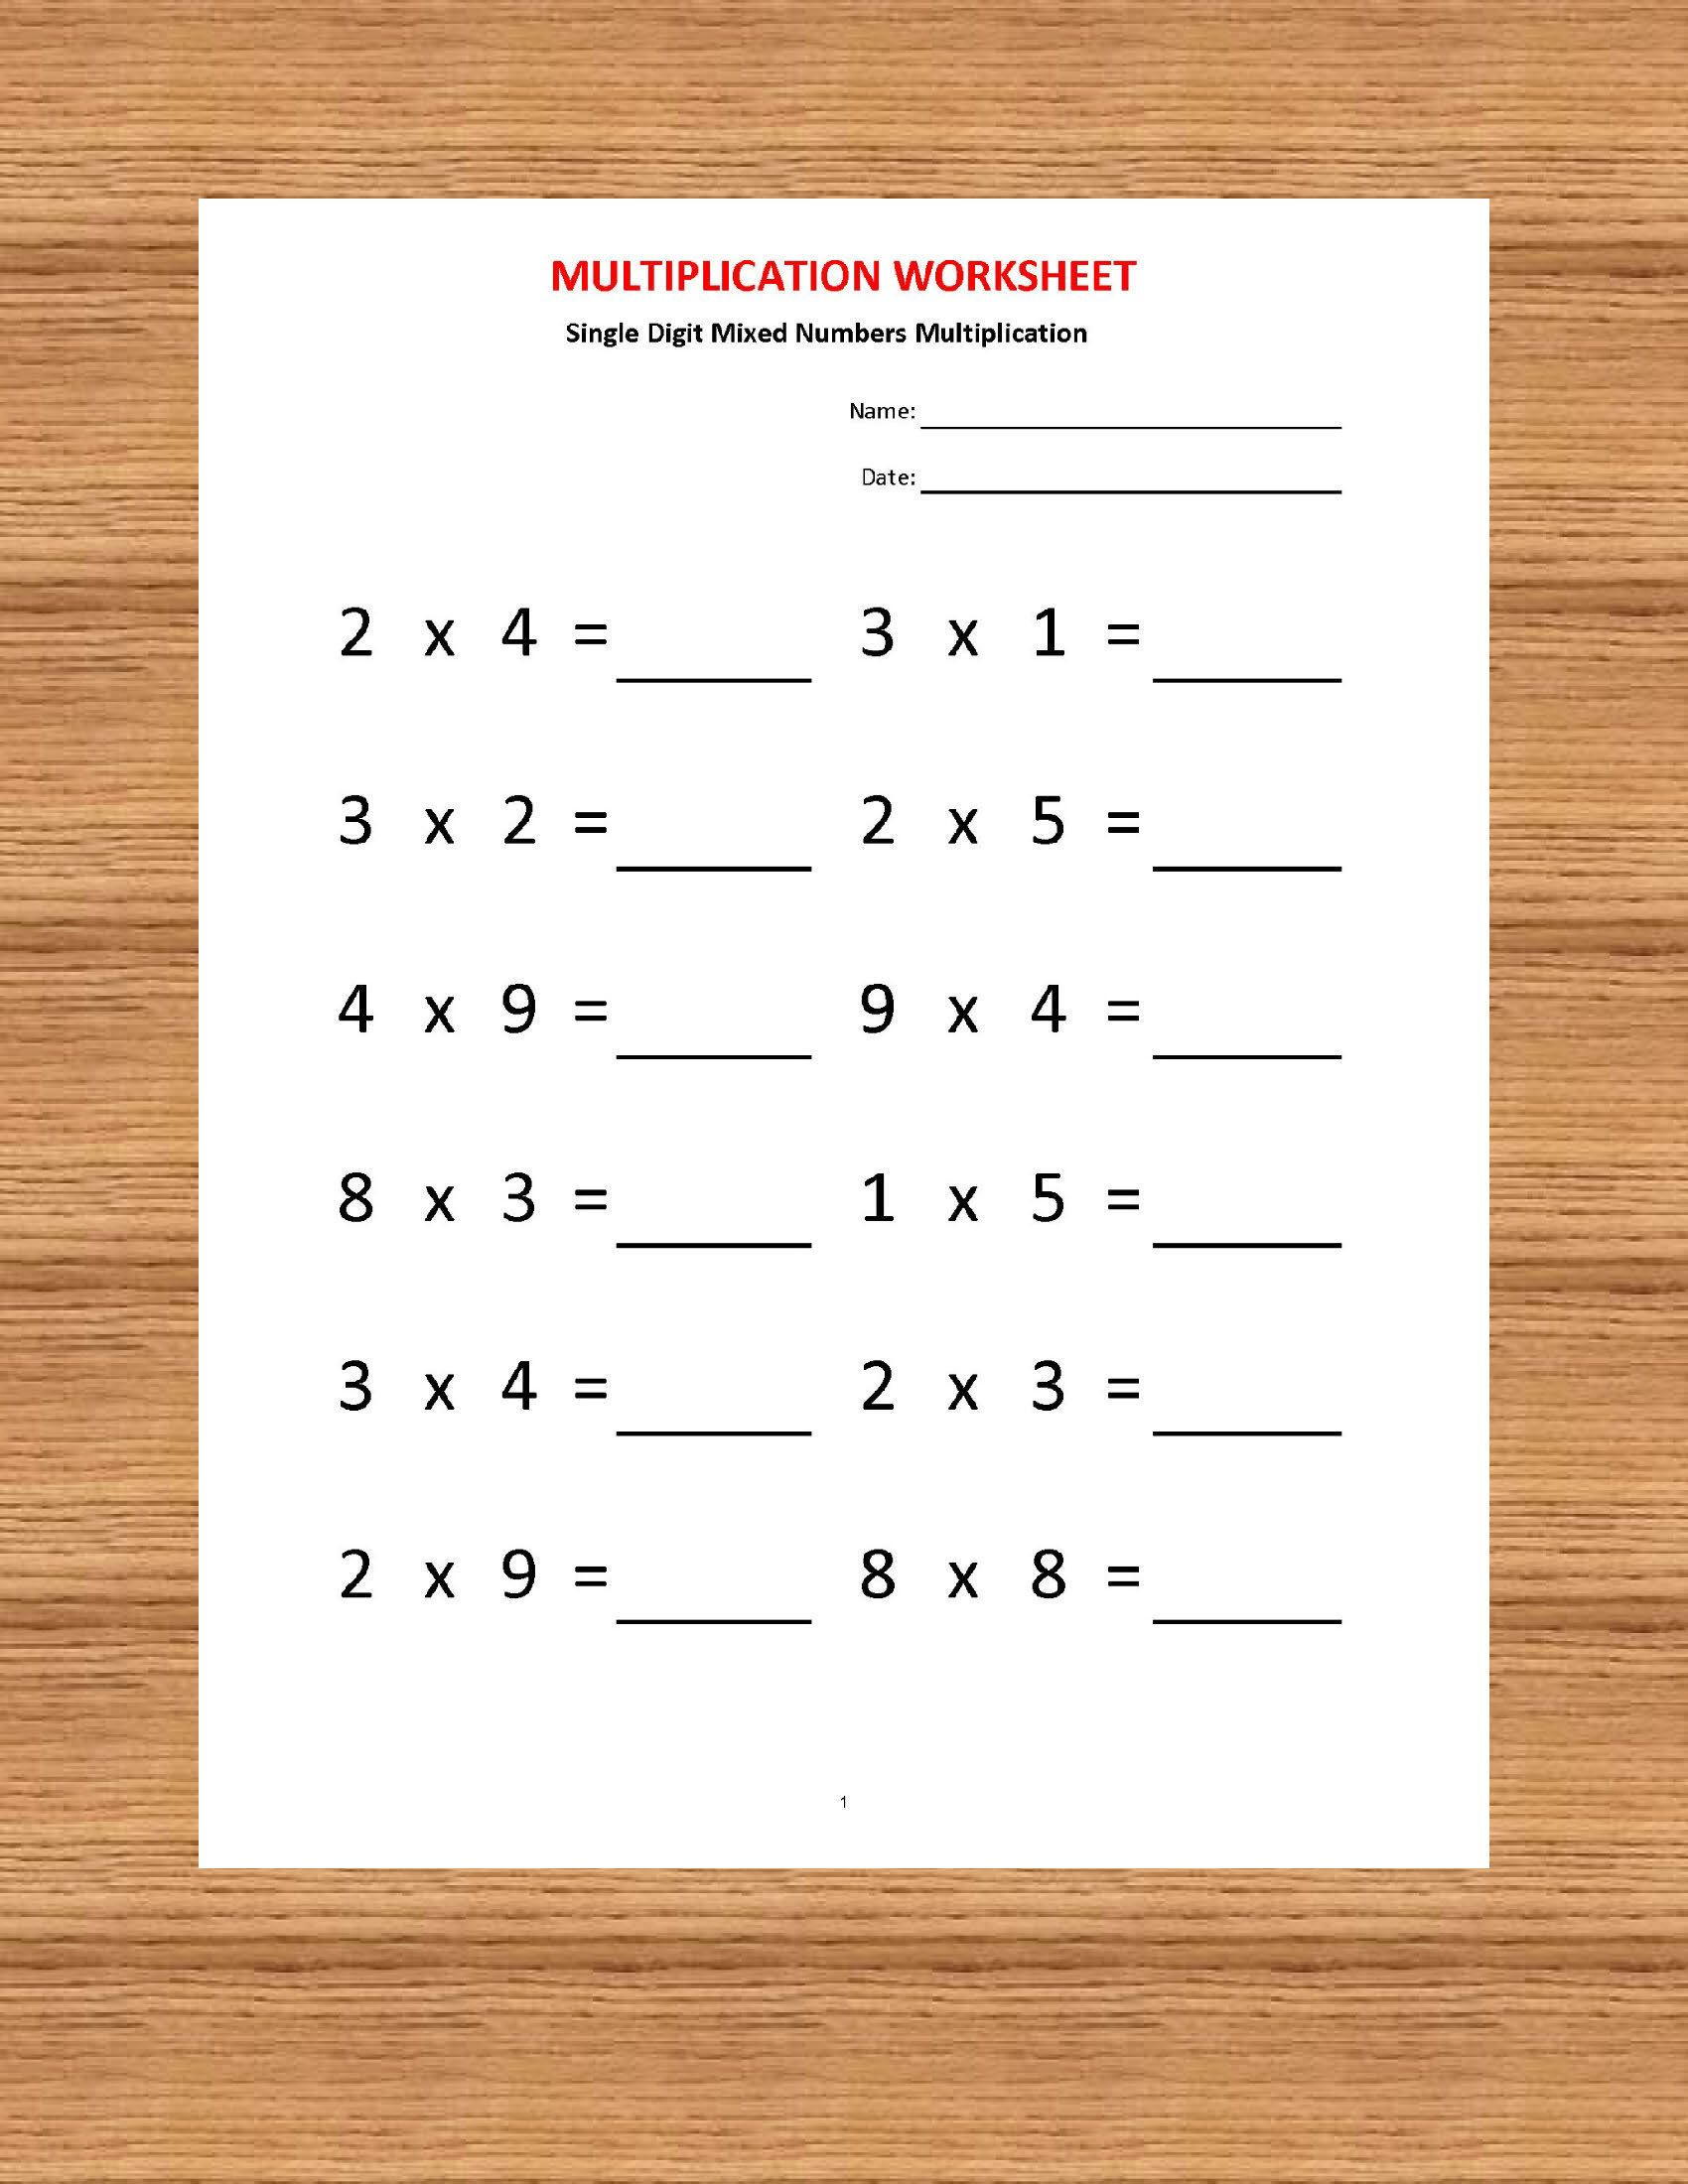 Multiplication Worksheets, Printable Worksheets intended for Multiplication Quiz Printable Pdf